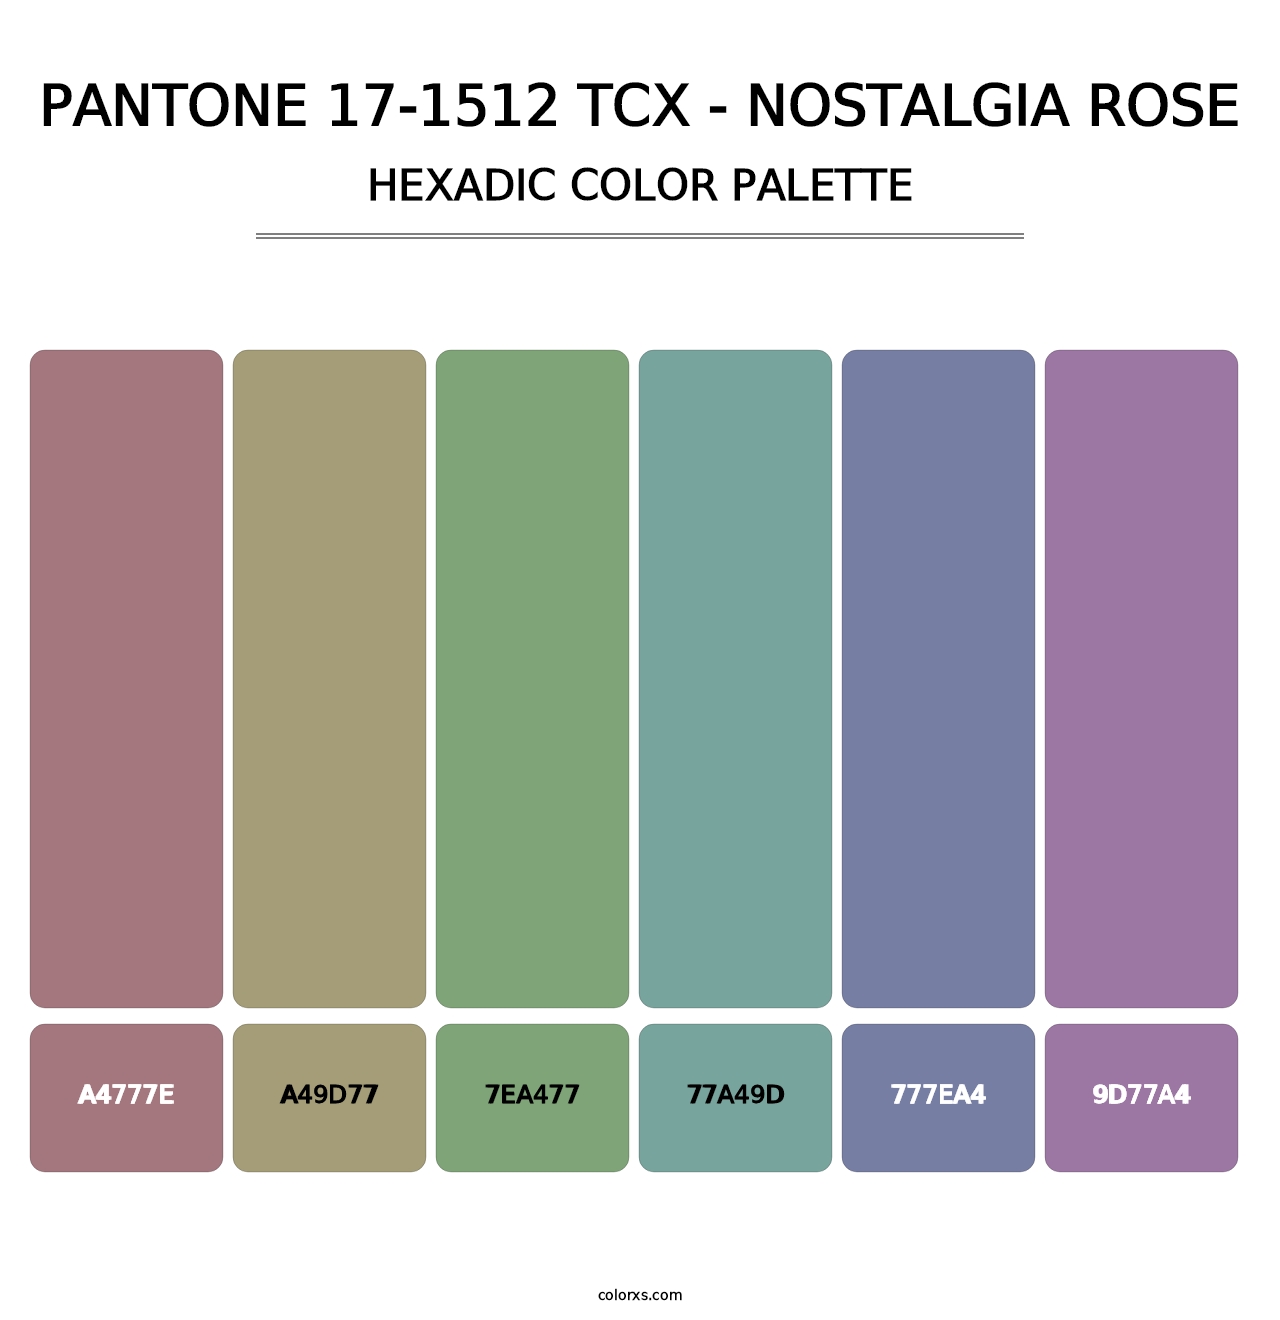 PANTONE 17-1512 TCX - Nostalgia Rose - Hexadic Color Palette